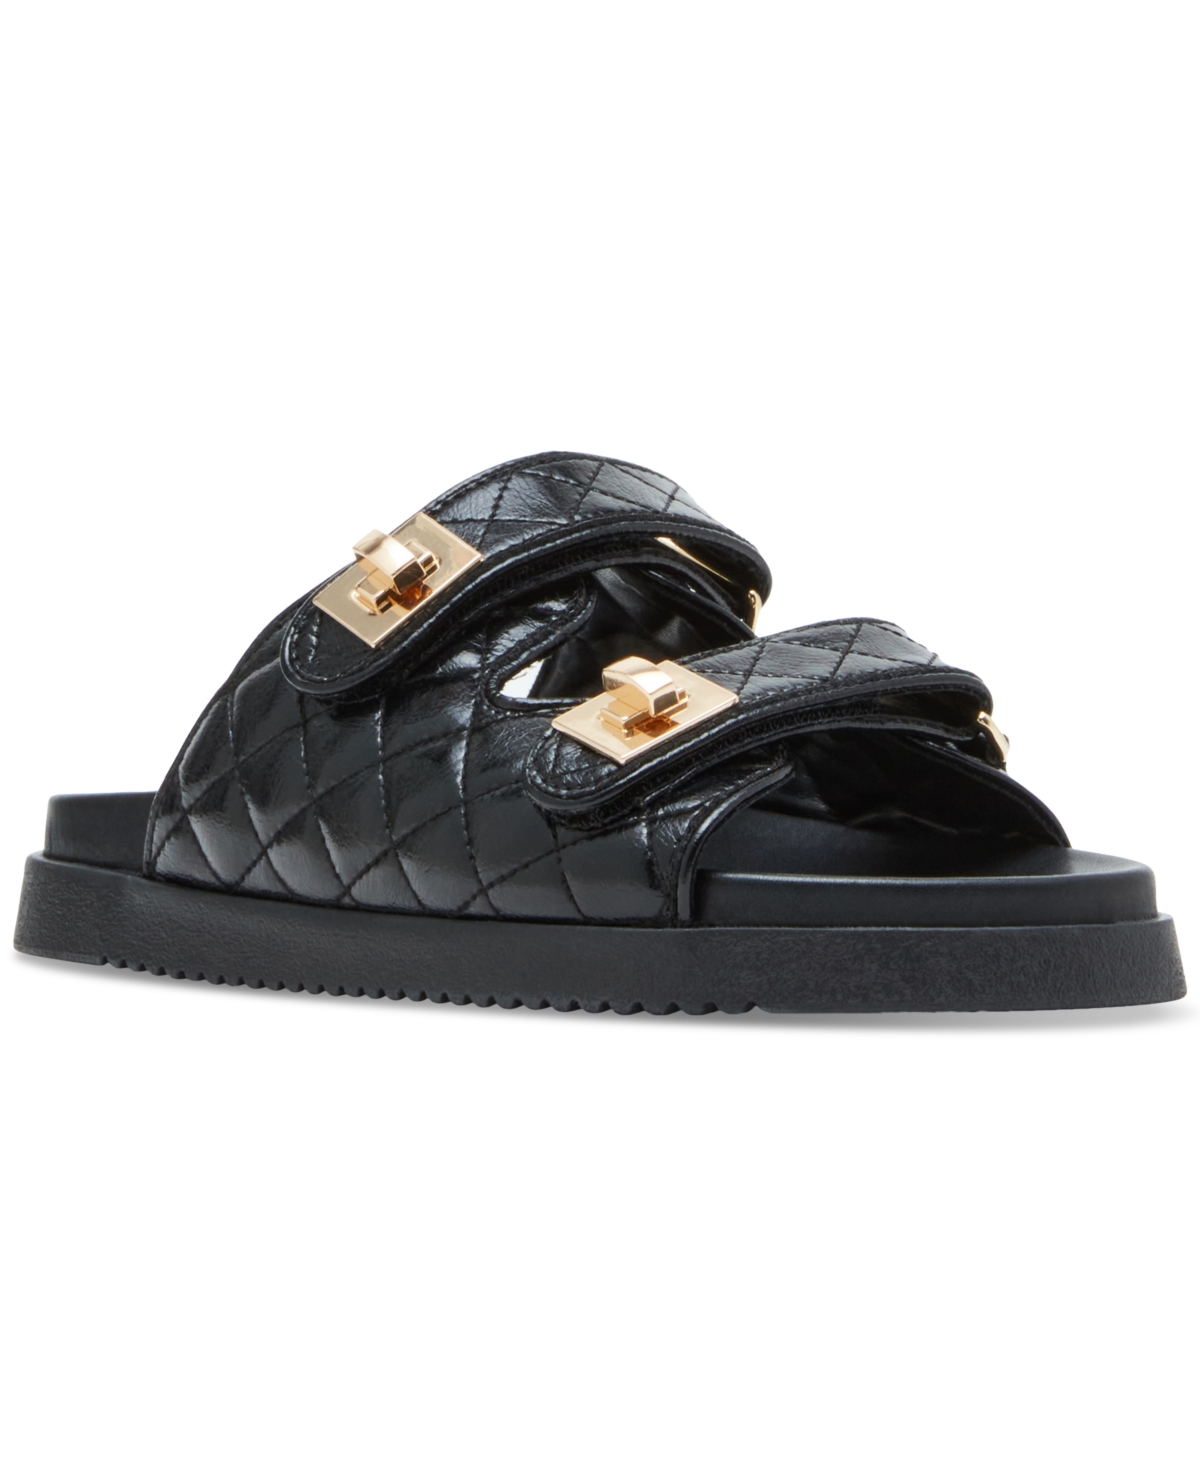 Women's Schmona Footbed Slide Sandals - Black Leather